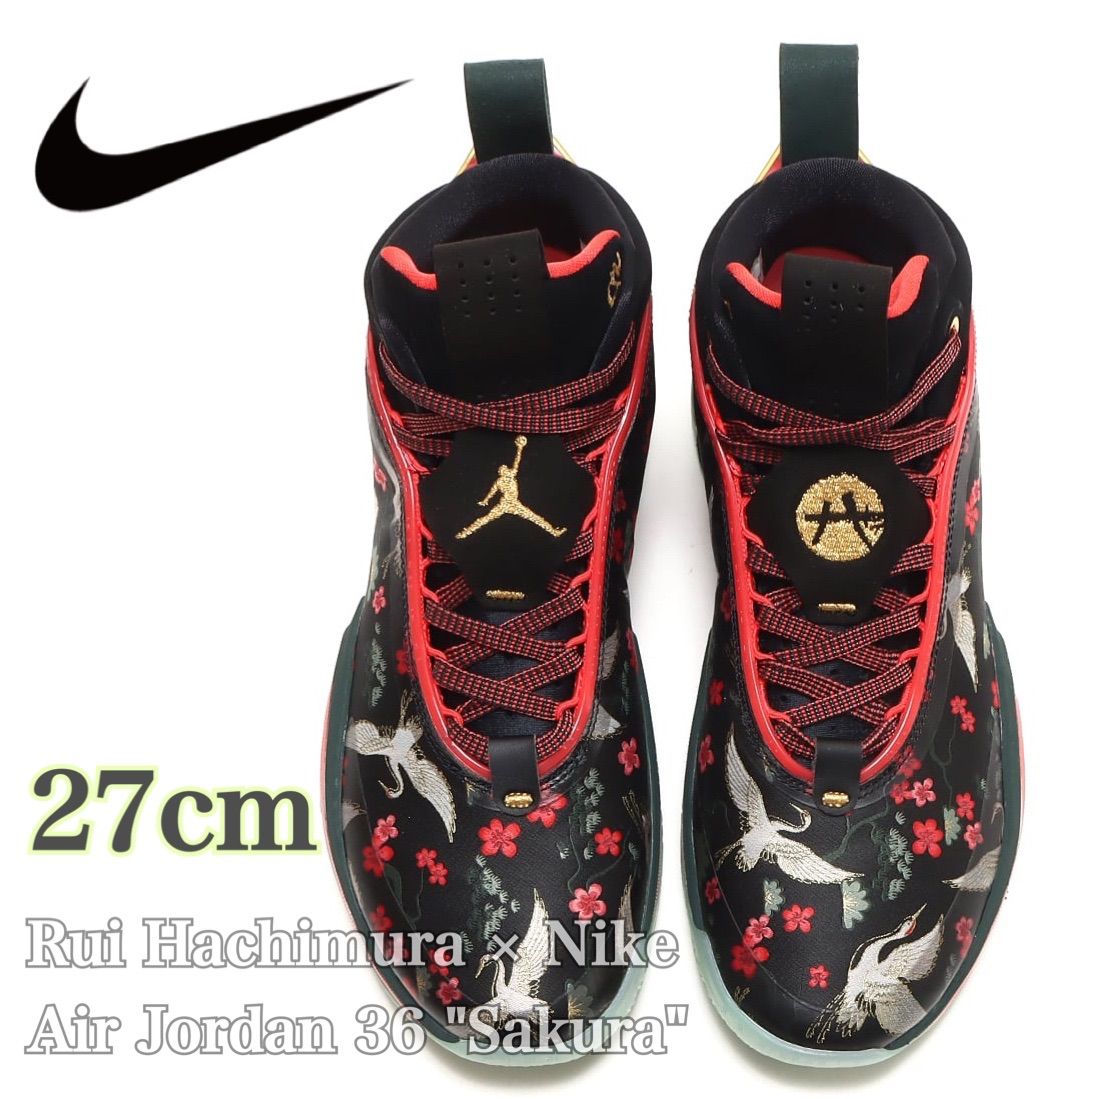 新品未使用】Rui Hachimura × Nike Air Jordan 36 